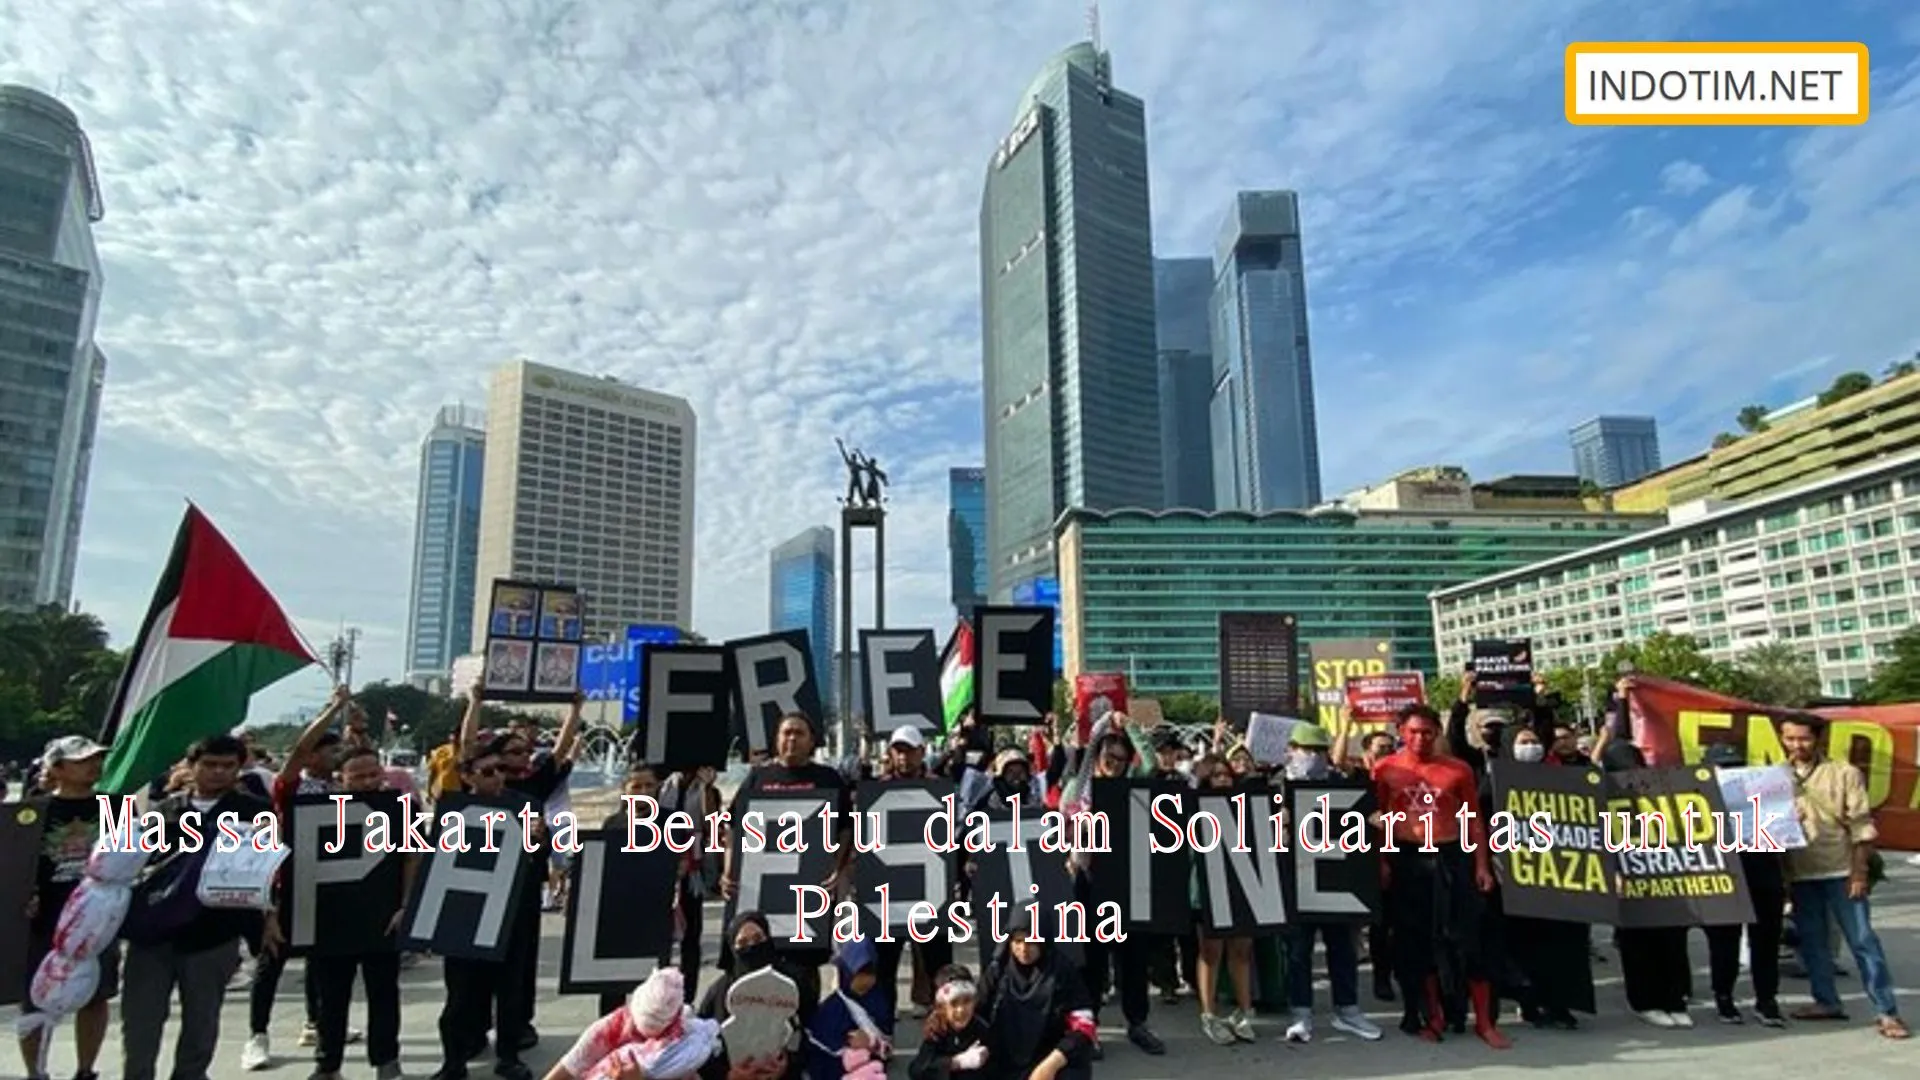 Massa Jakarta Bersatu dalam Solidaritas untuk Palestina